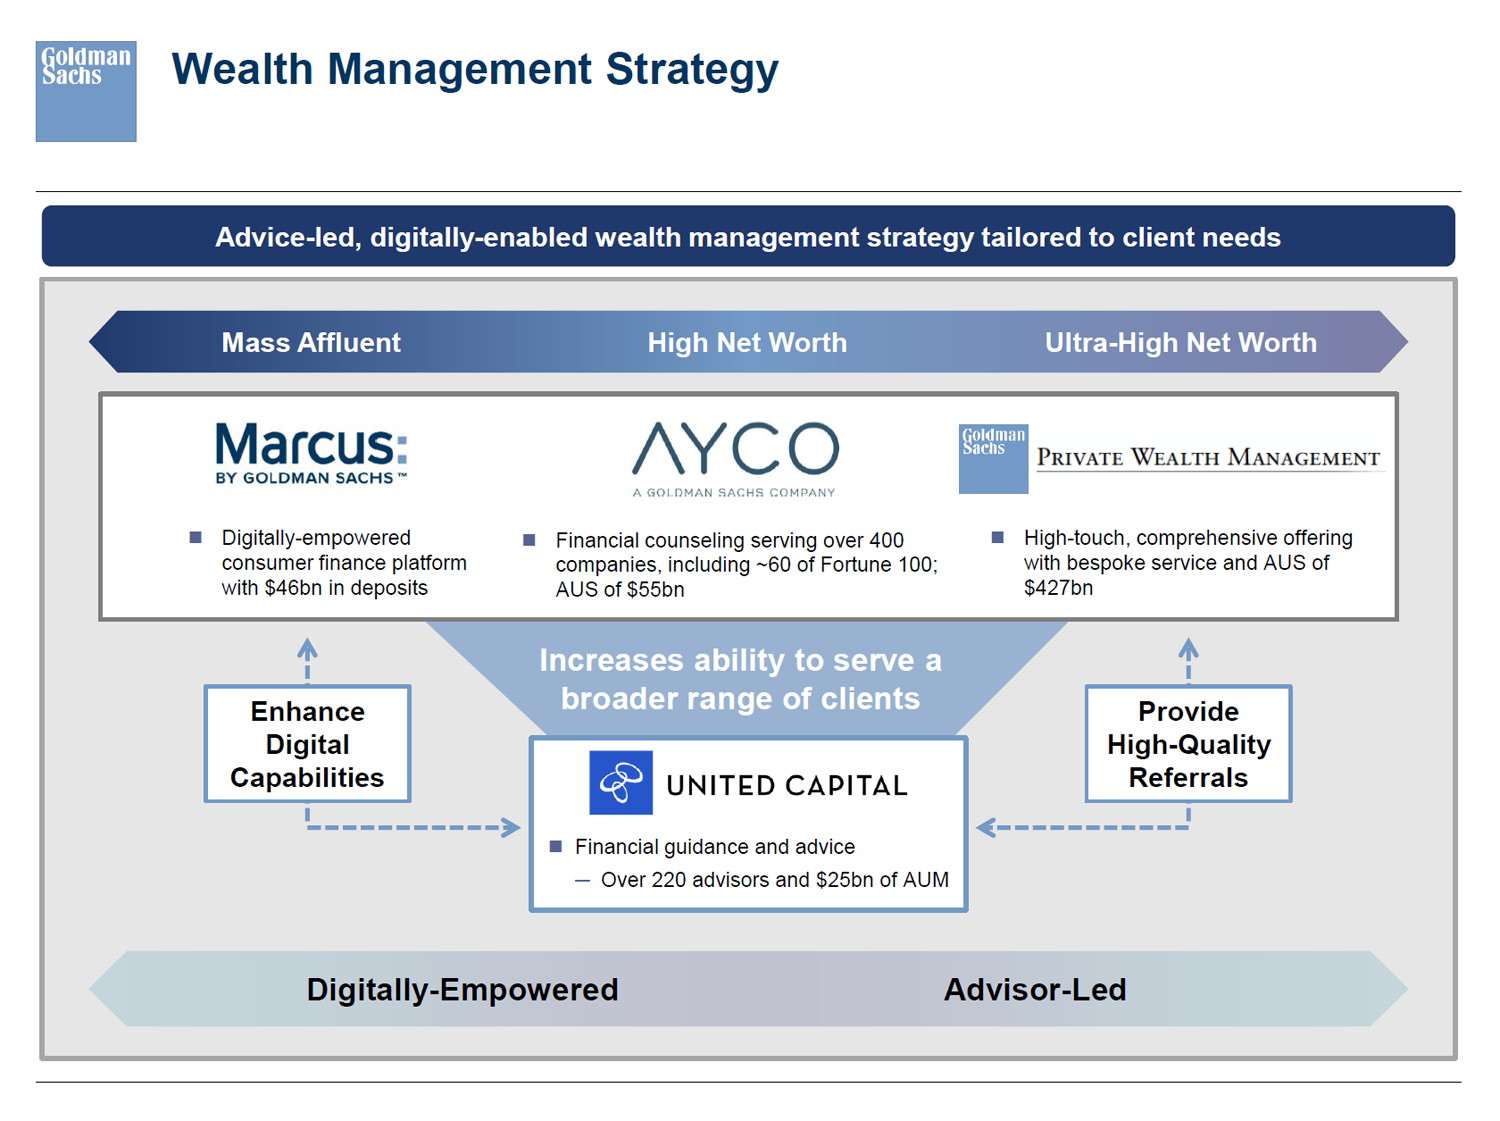 Goldman Sachs wealth management strategy